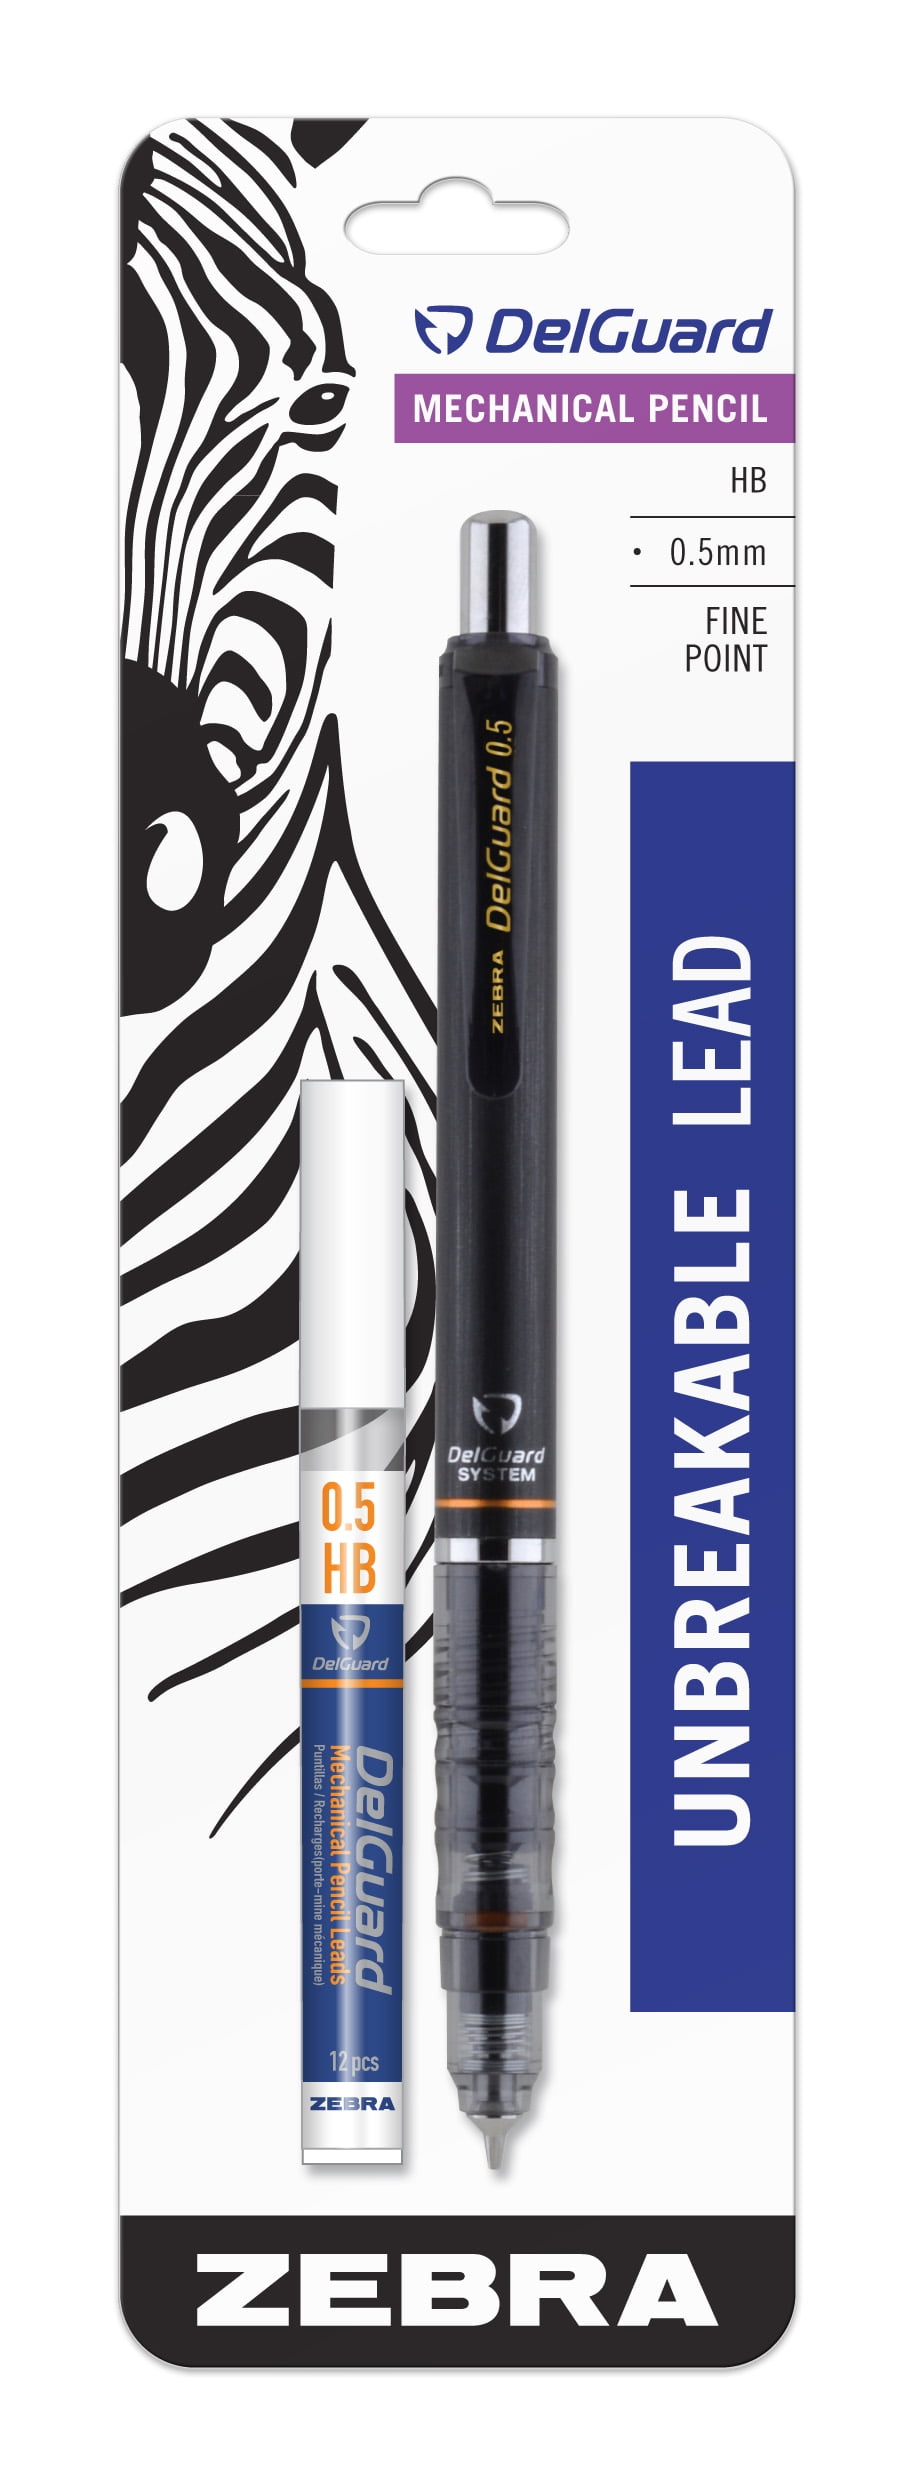 Zebra DelGuard Mechanical Pencil with Bonus Lead Refill, Fine Point, 0.5mm  Point Size, Standard #2 HB Lead, Black Barrel, 1-Count